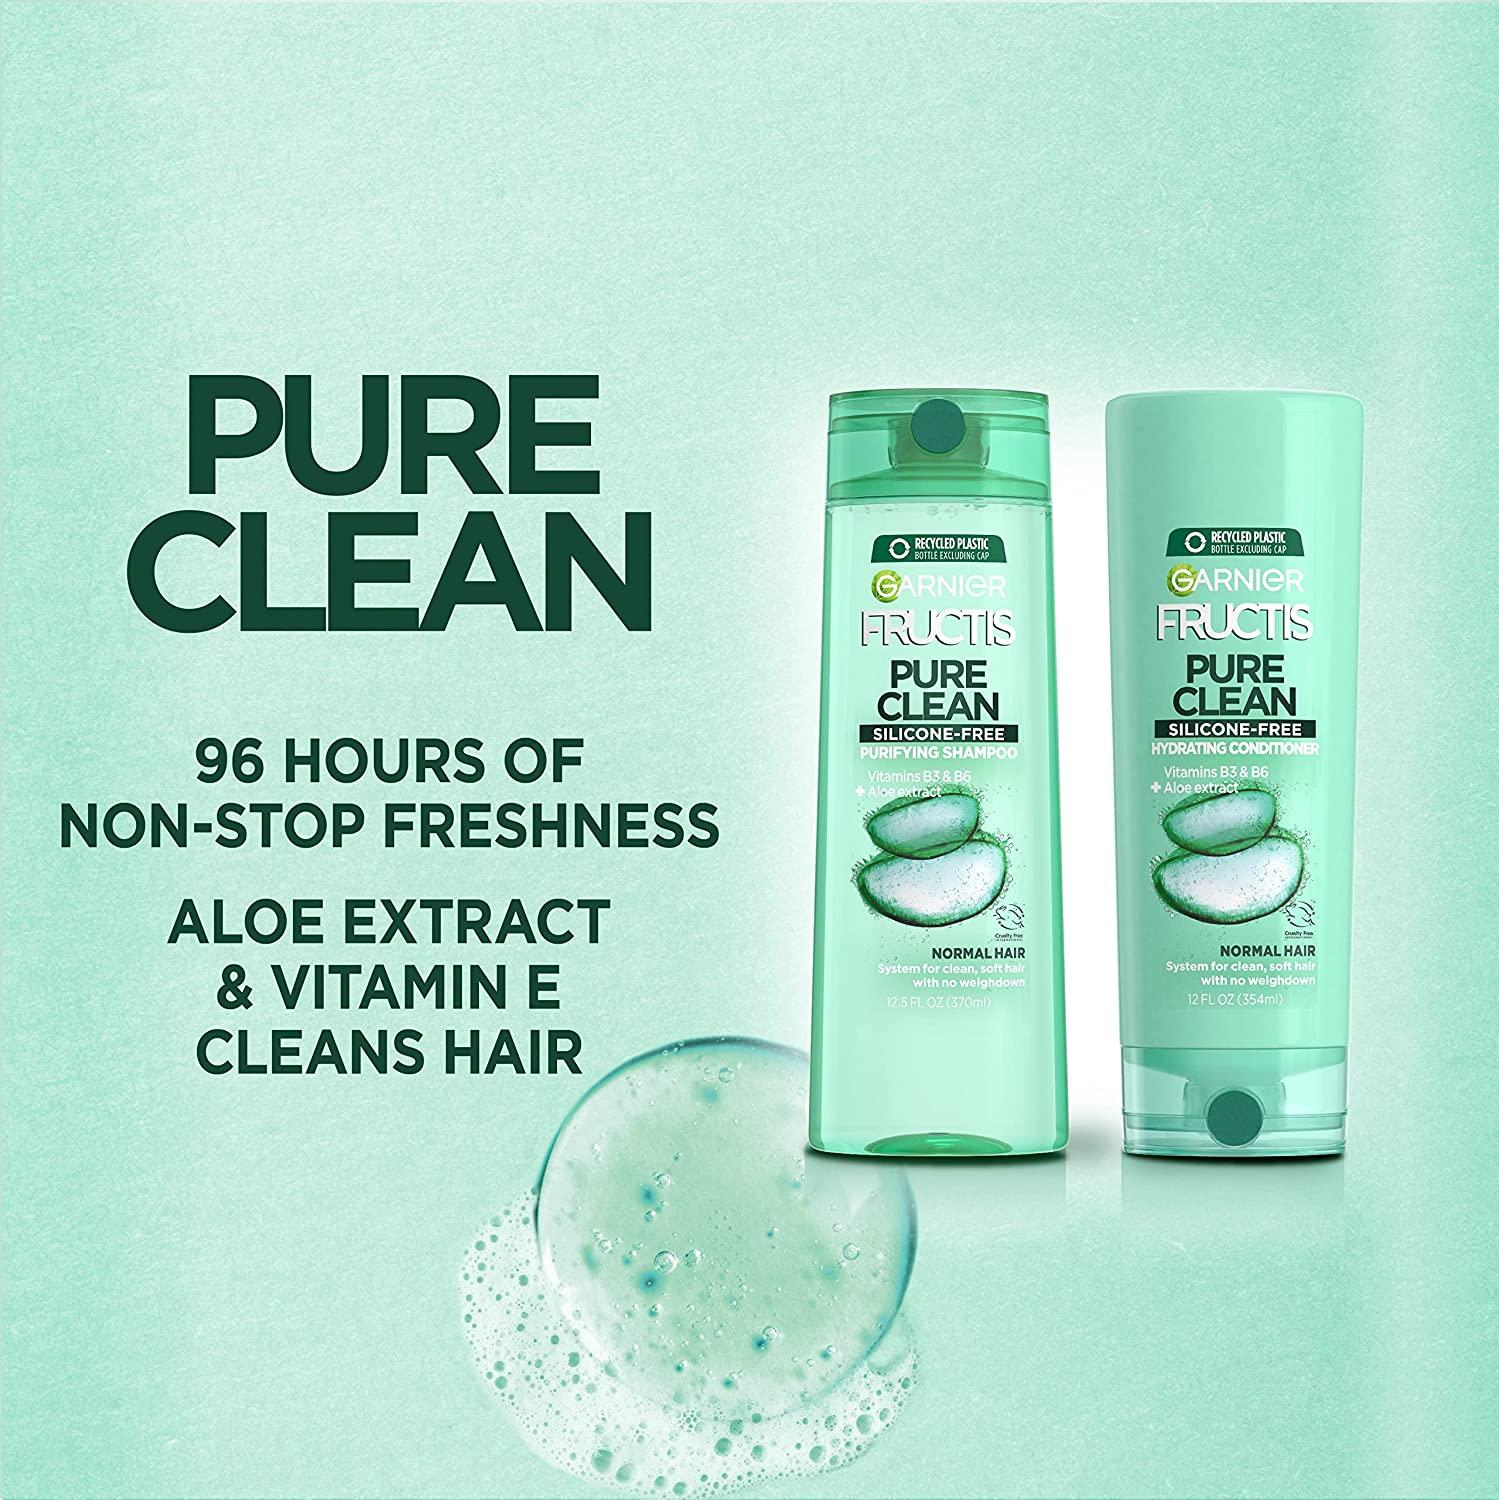 Garnier Fructis Pure Fortifying Shampoo Clean with fl Aloe ml) (370 12.5 oz